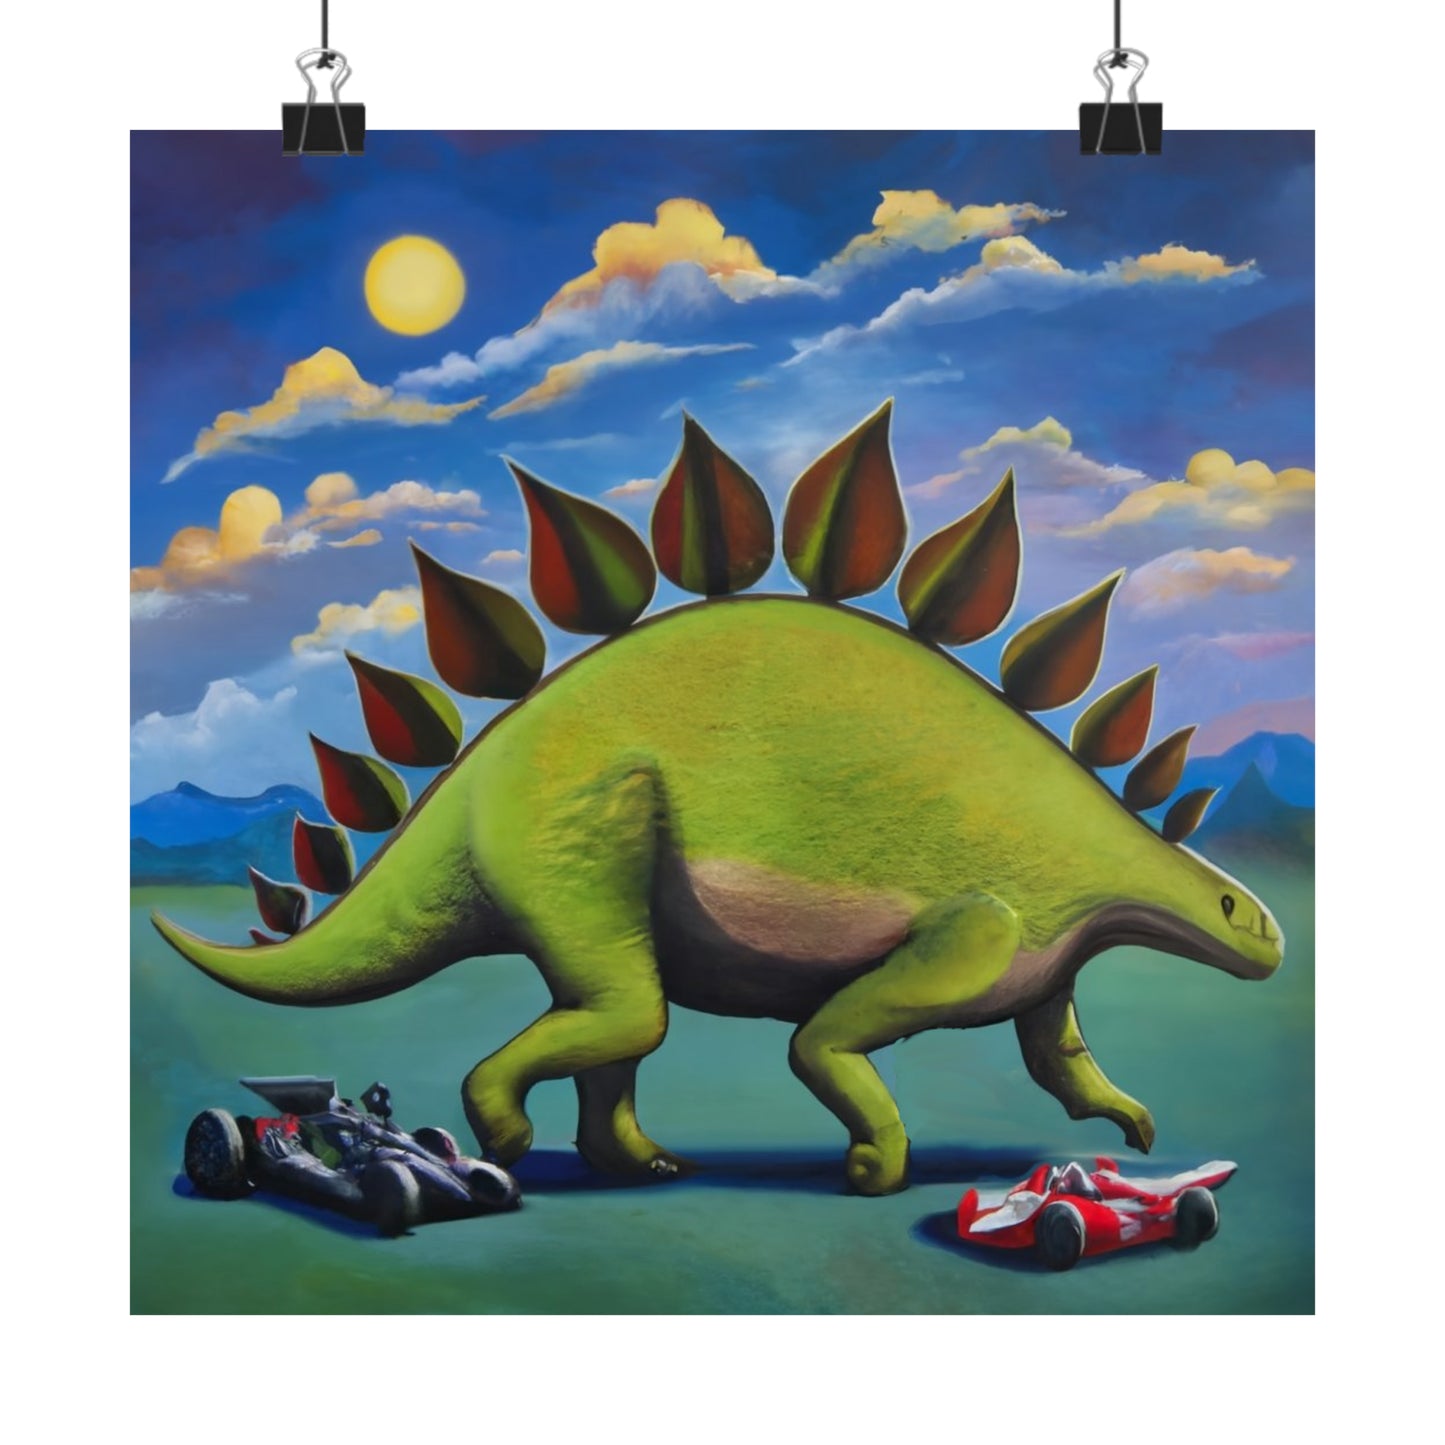 Stegosaurus Meets Indy Cars: Cute Abstract Wall Art